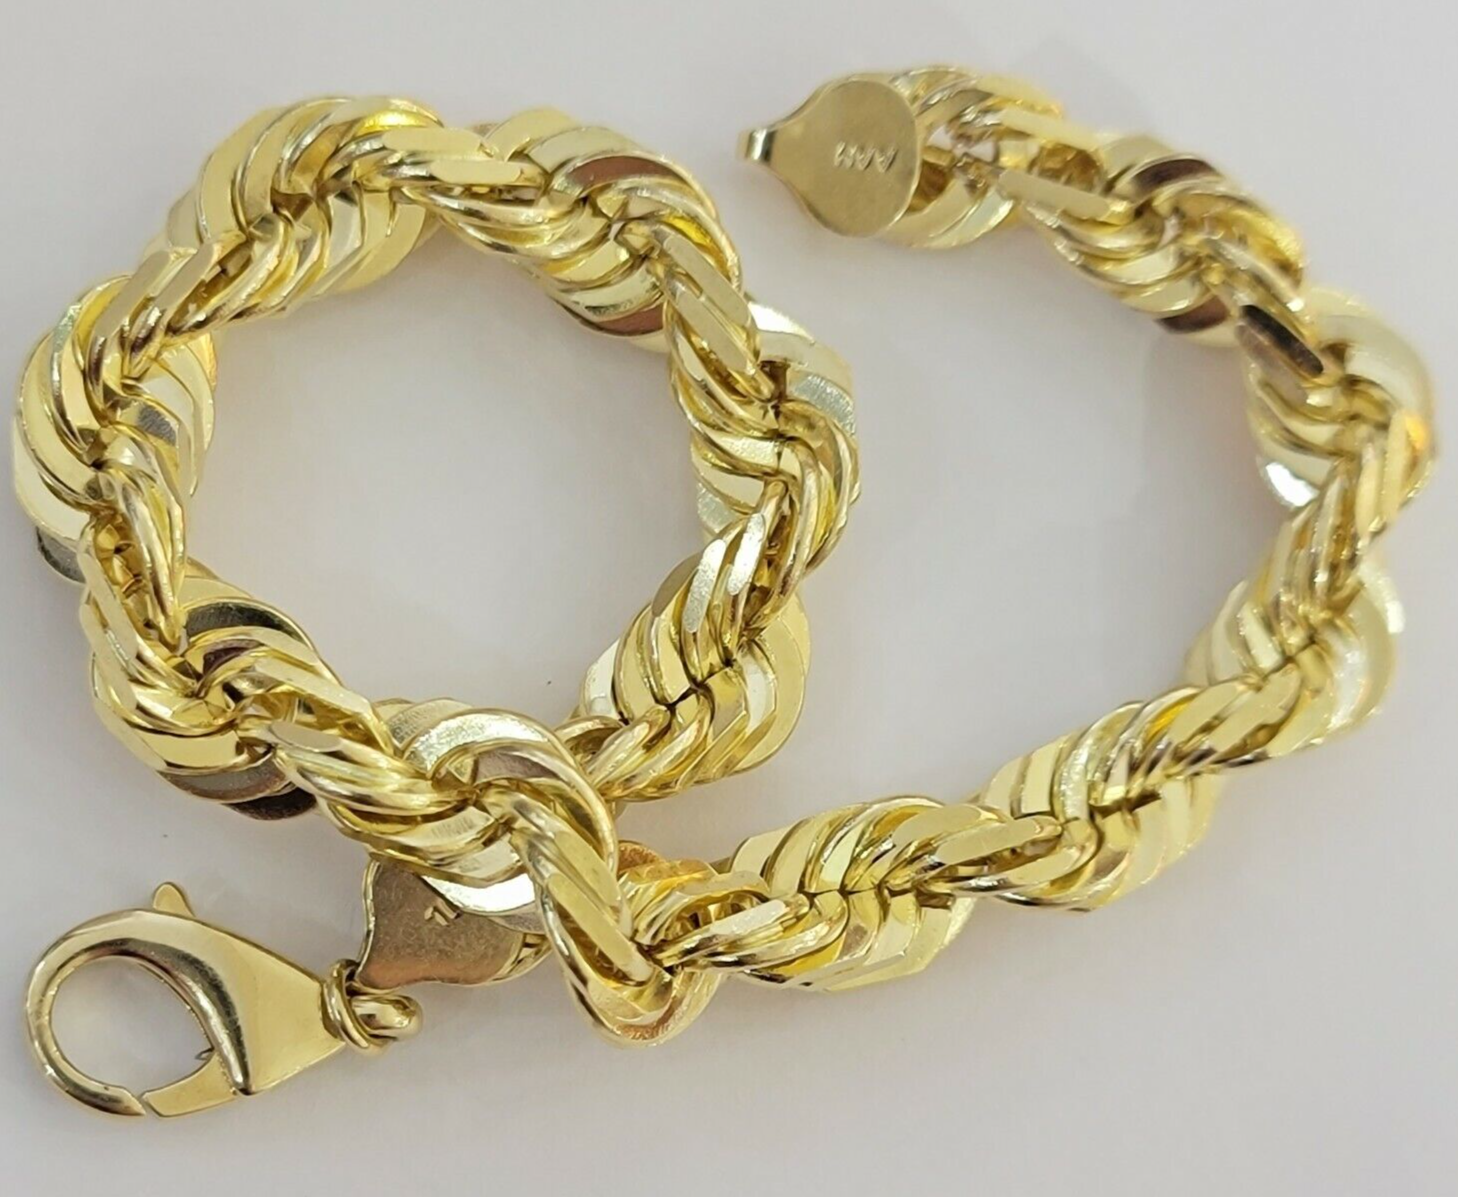 10mm 10k Yellow Gold Rope Mens Bracelet 7.5